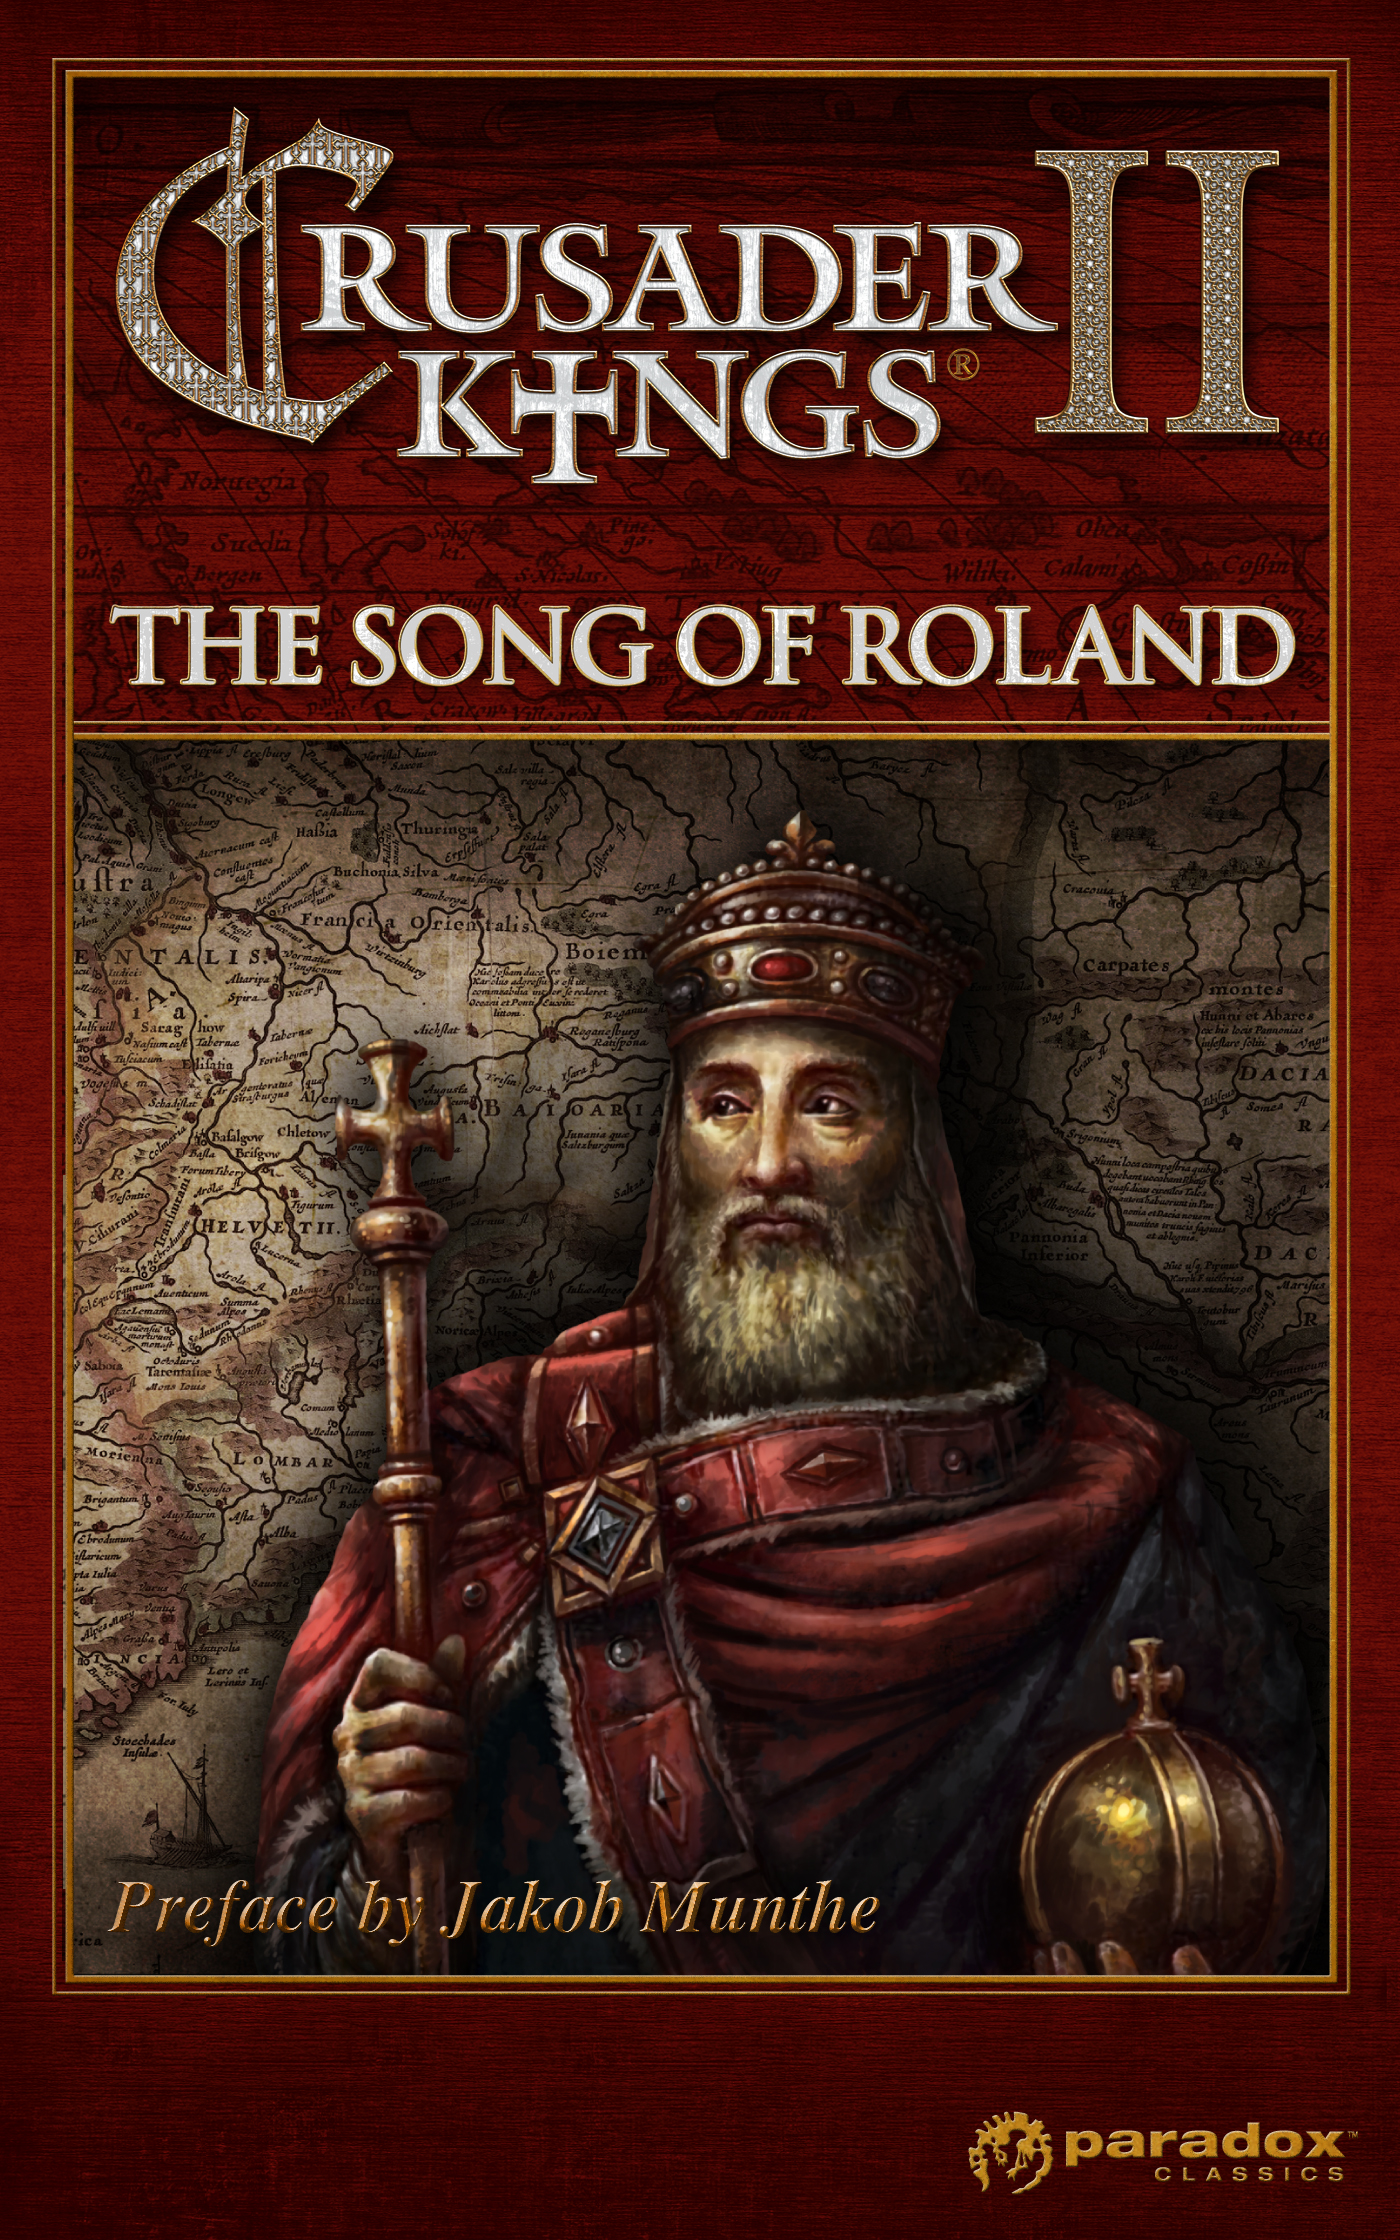 E-book - Crusader Kings II: The Song of Roland screenshot